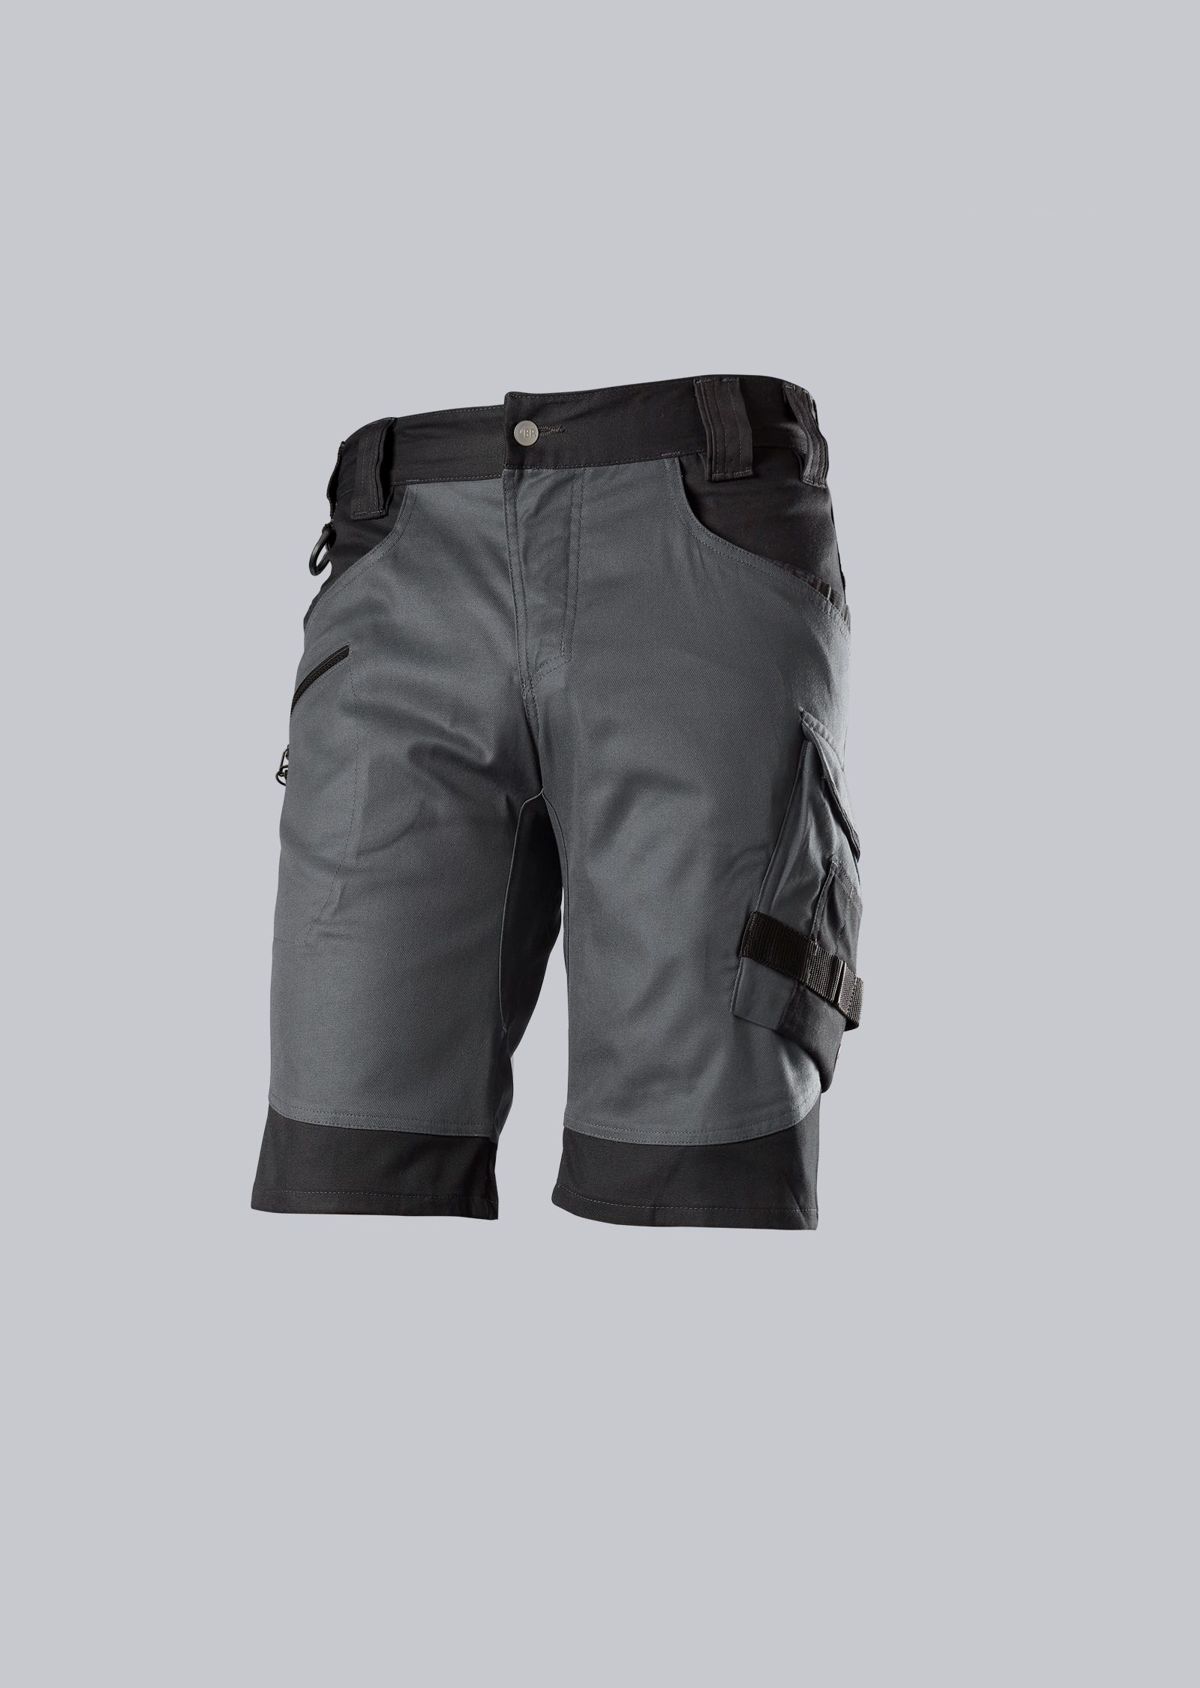 BP® Leichte Stretch-Shorts